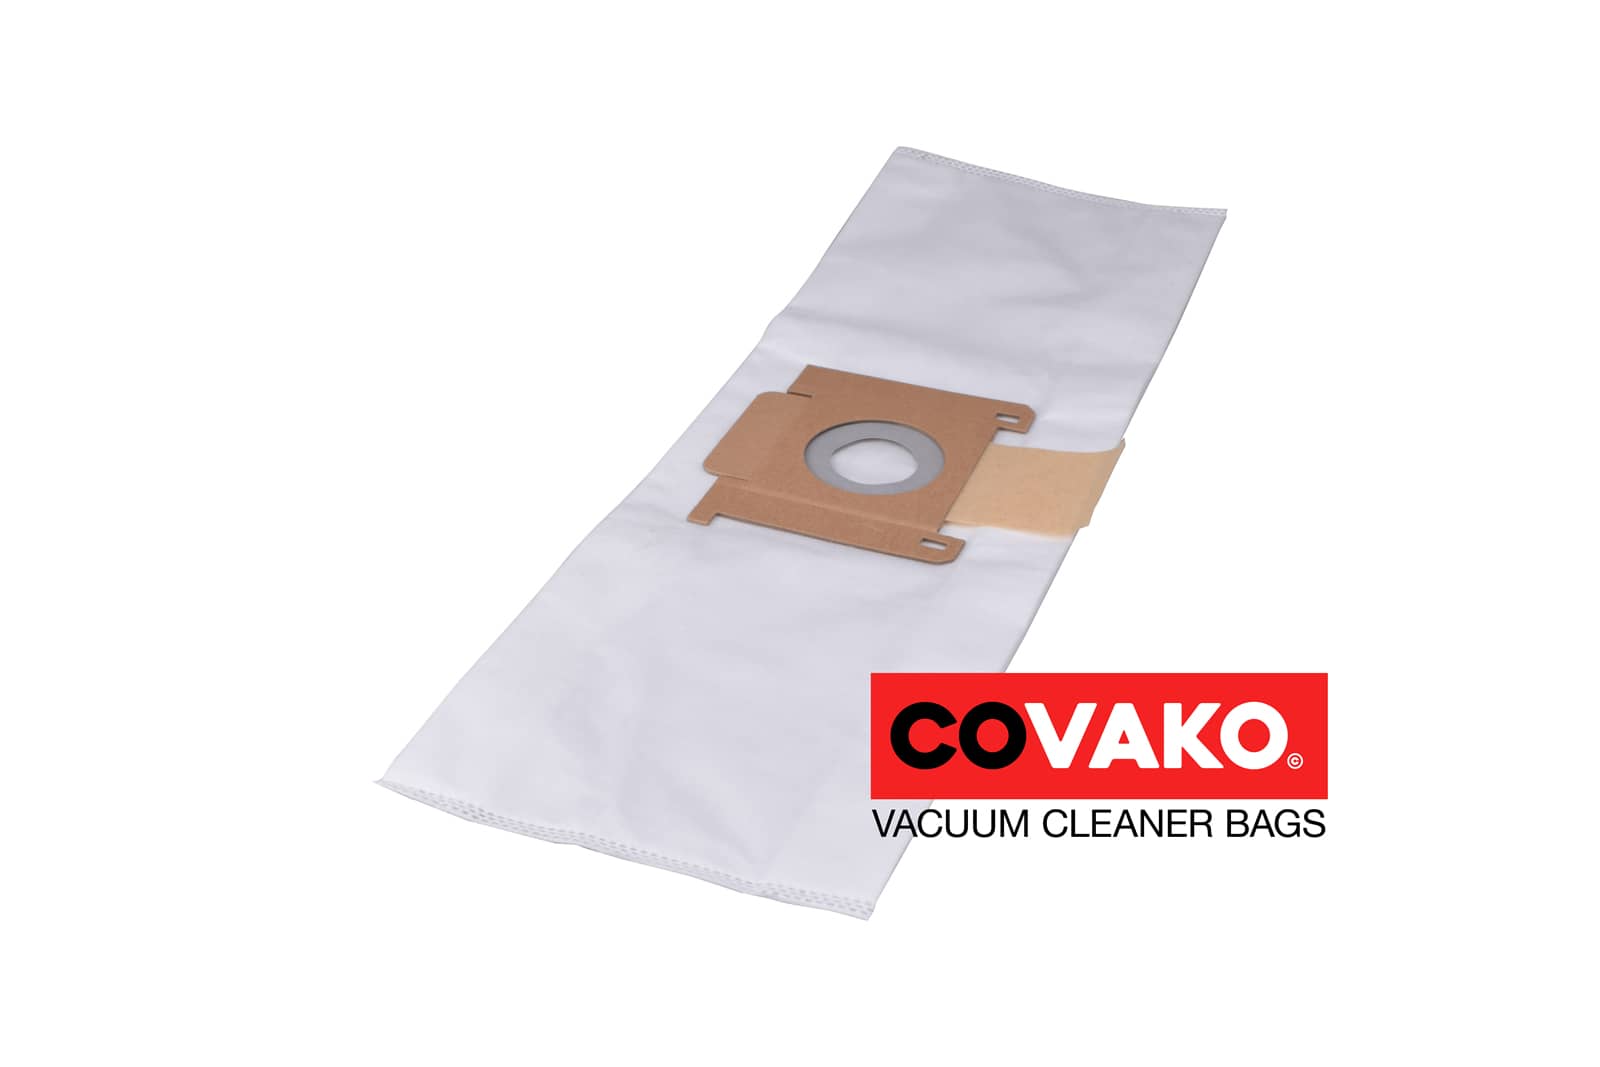 Clean a la Card Compacto 6 / Synthesis - Clean a la Card vacuum cleaner bags